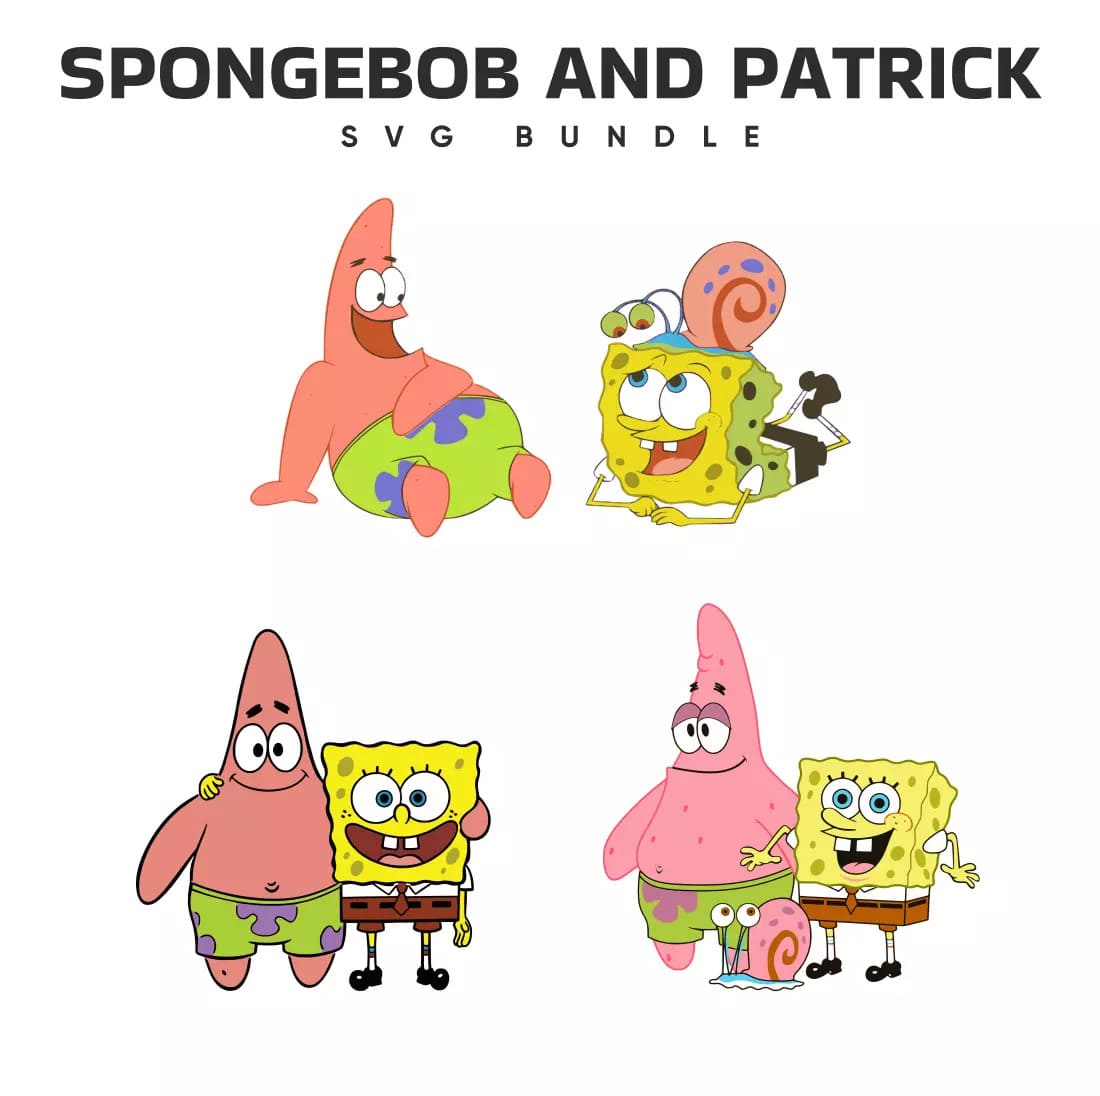 Spongebob And Patrick SVG Bundle Preview.